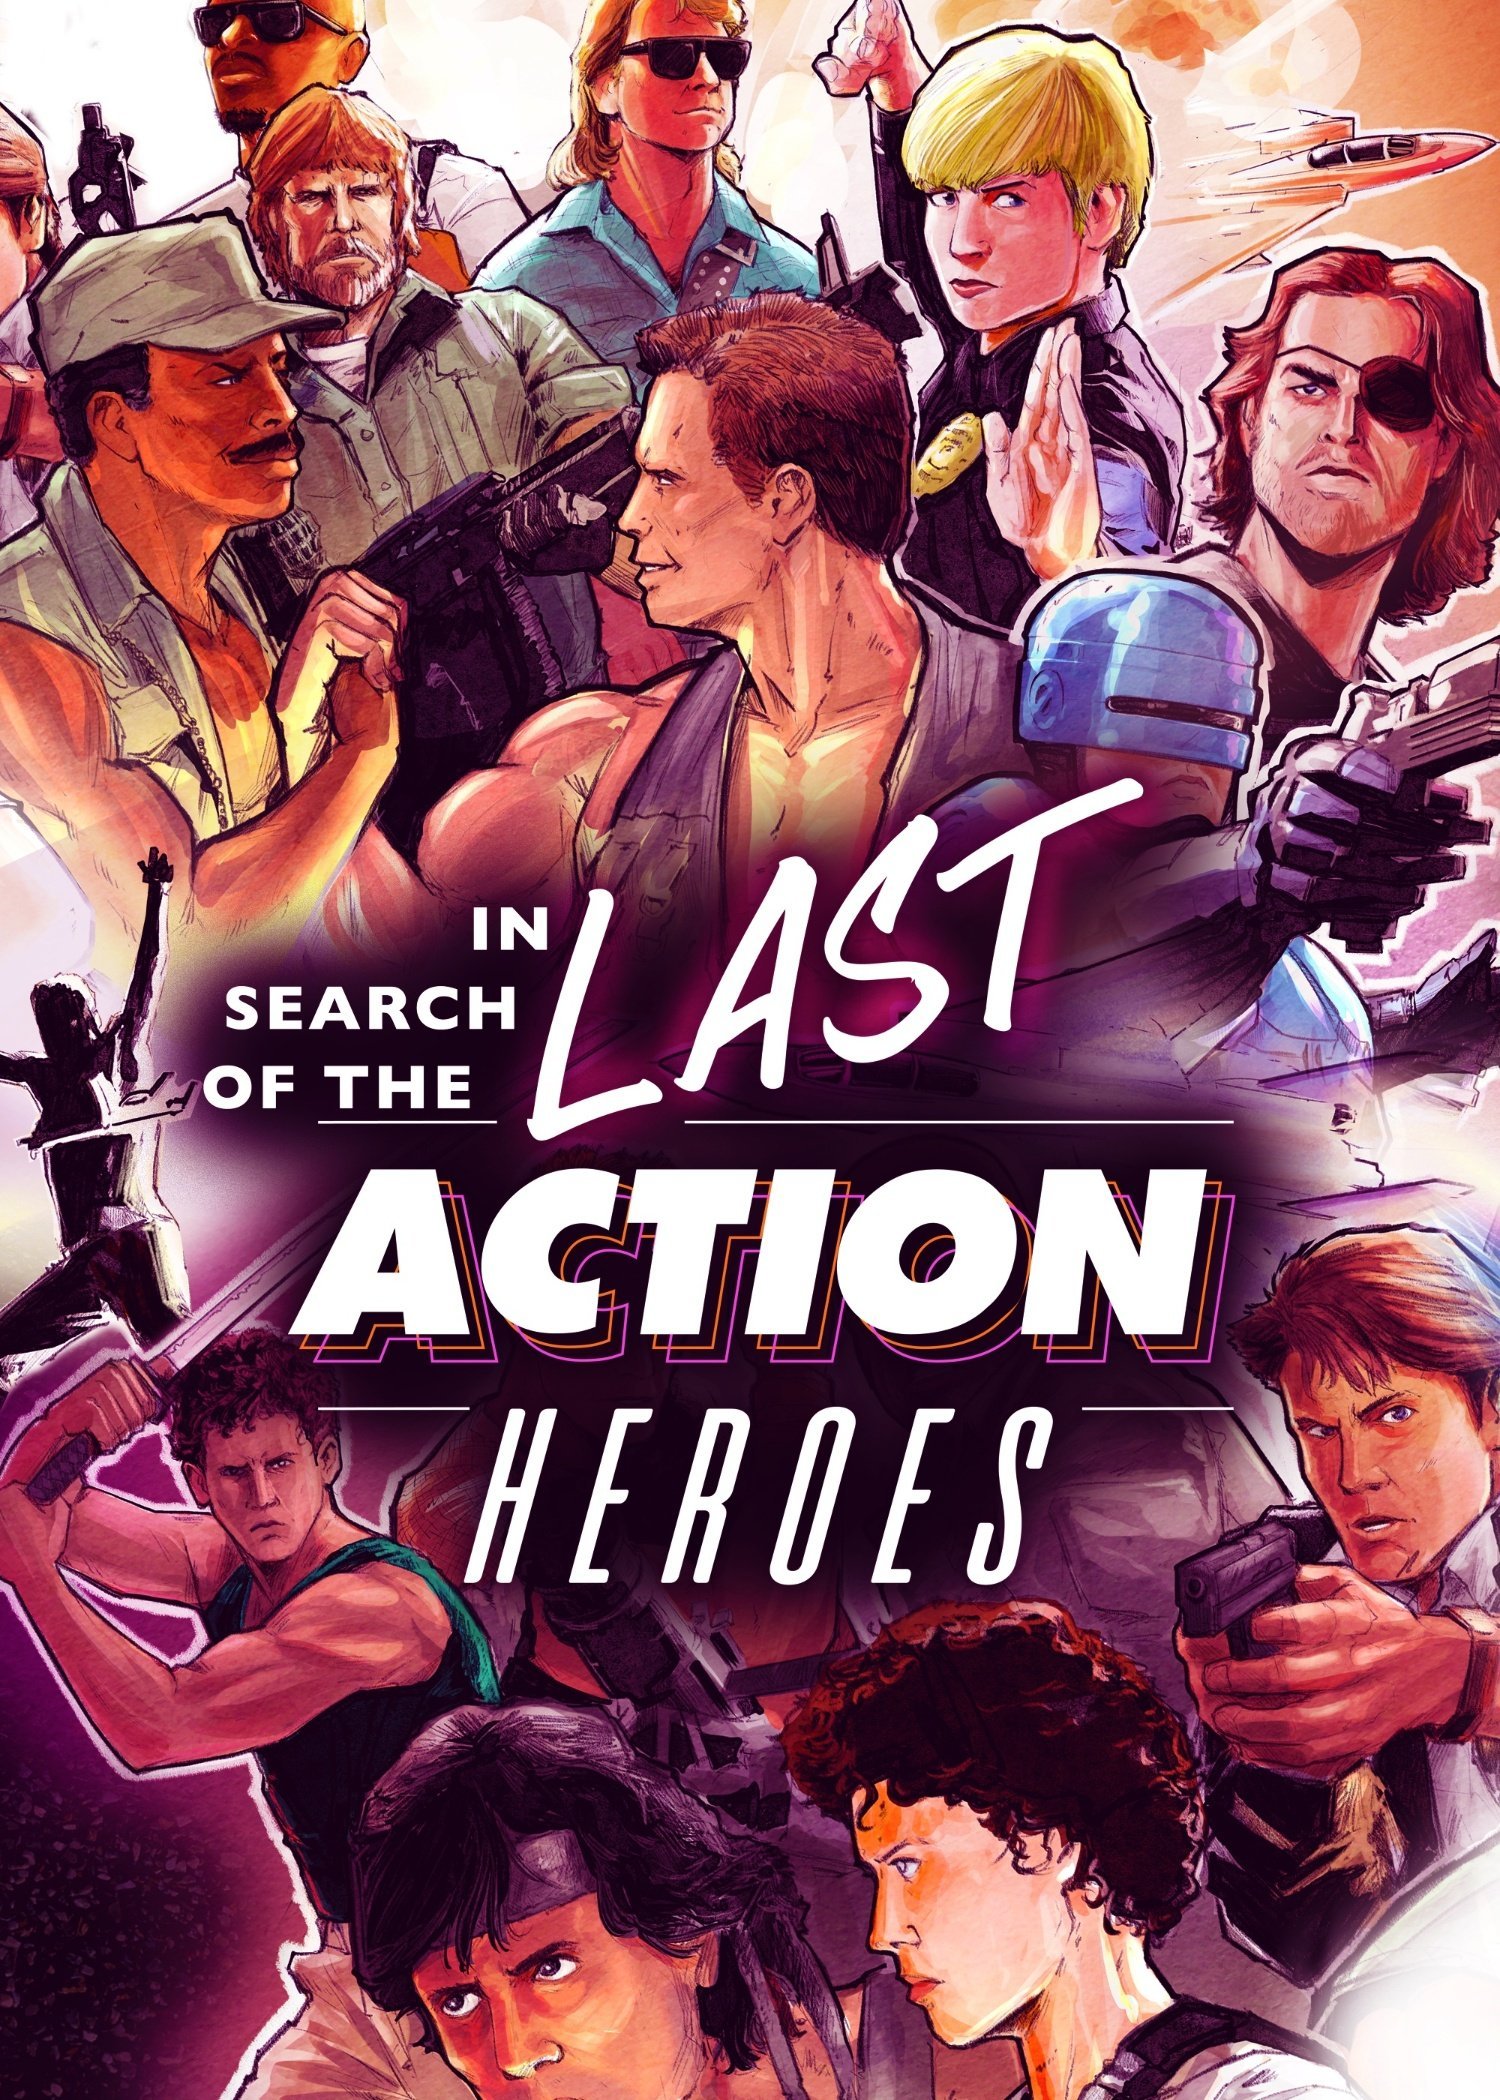 In Search of the Last Action Heroes - Movies - Buy/Rent - Rakuten TV